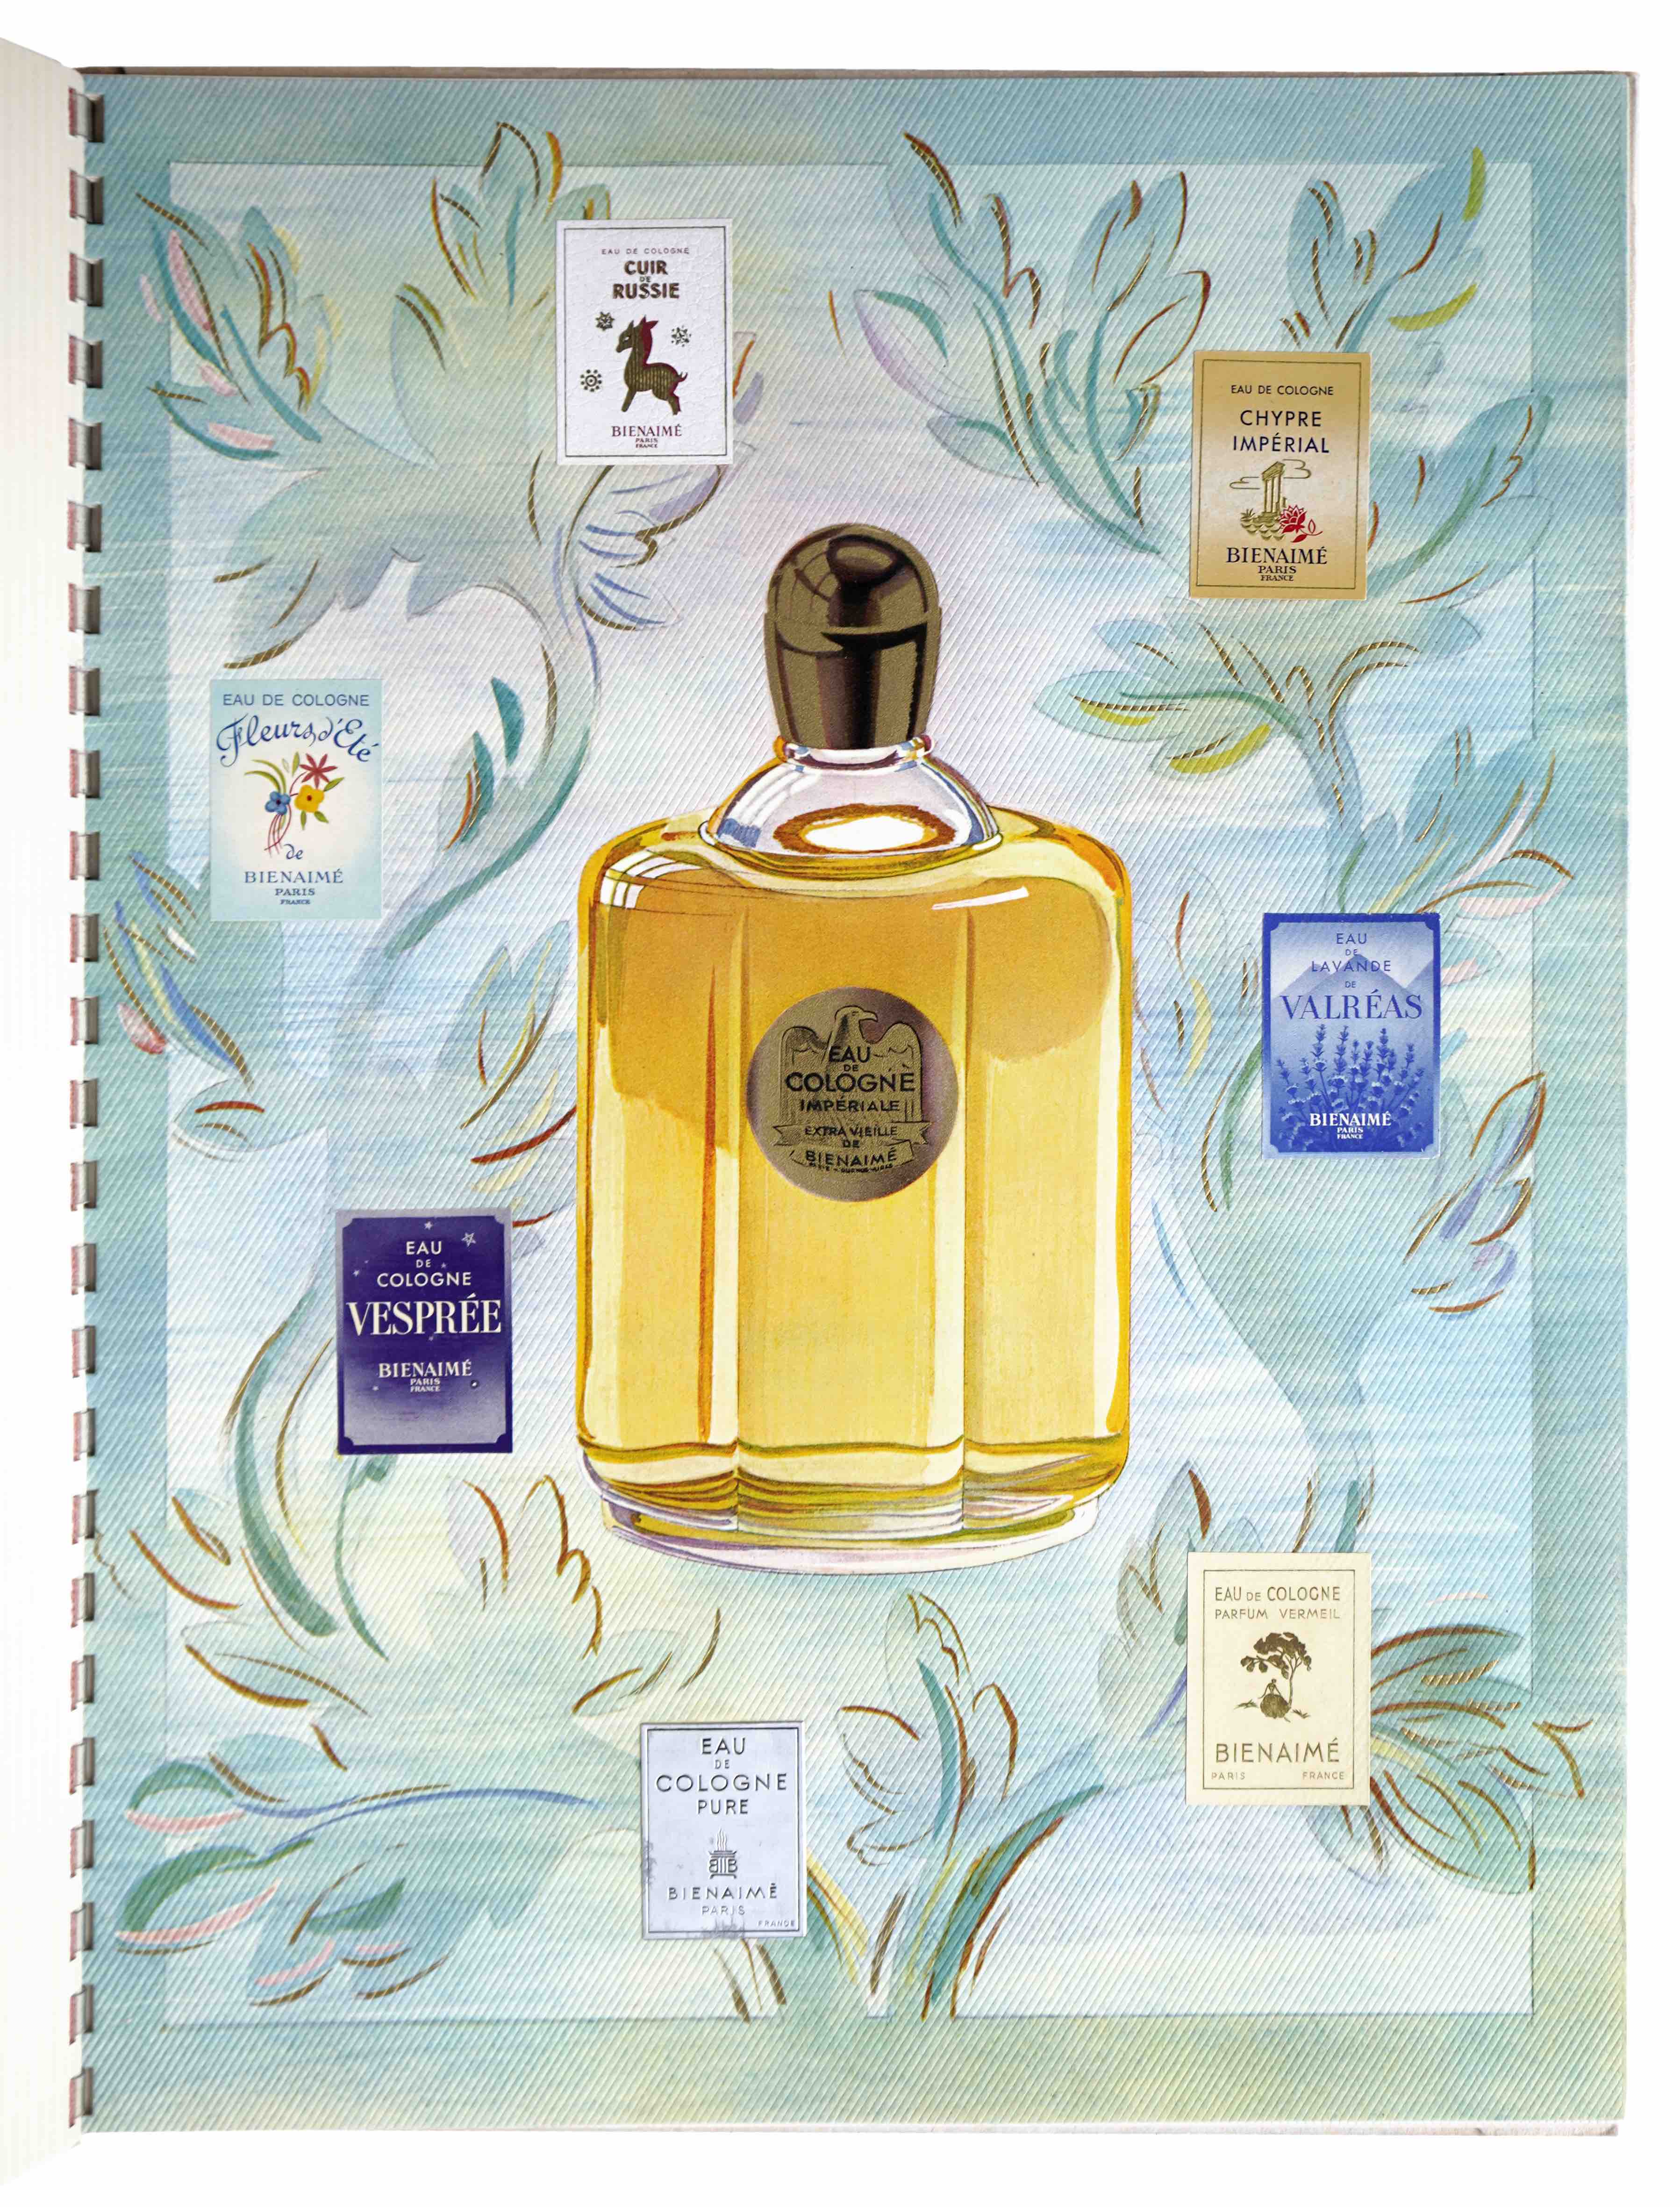 [BIENAIME] PERFUME TRADE CATALOGUE]. - Parfums Bienaim. Paris, Draeger, 1947.